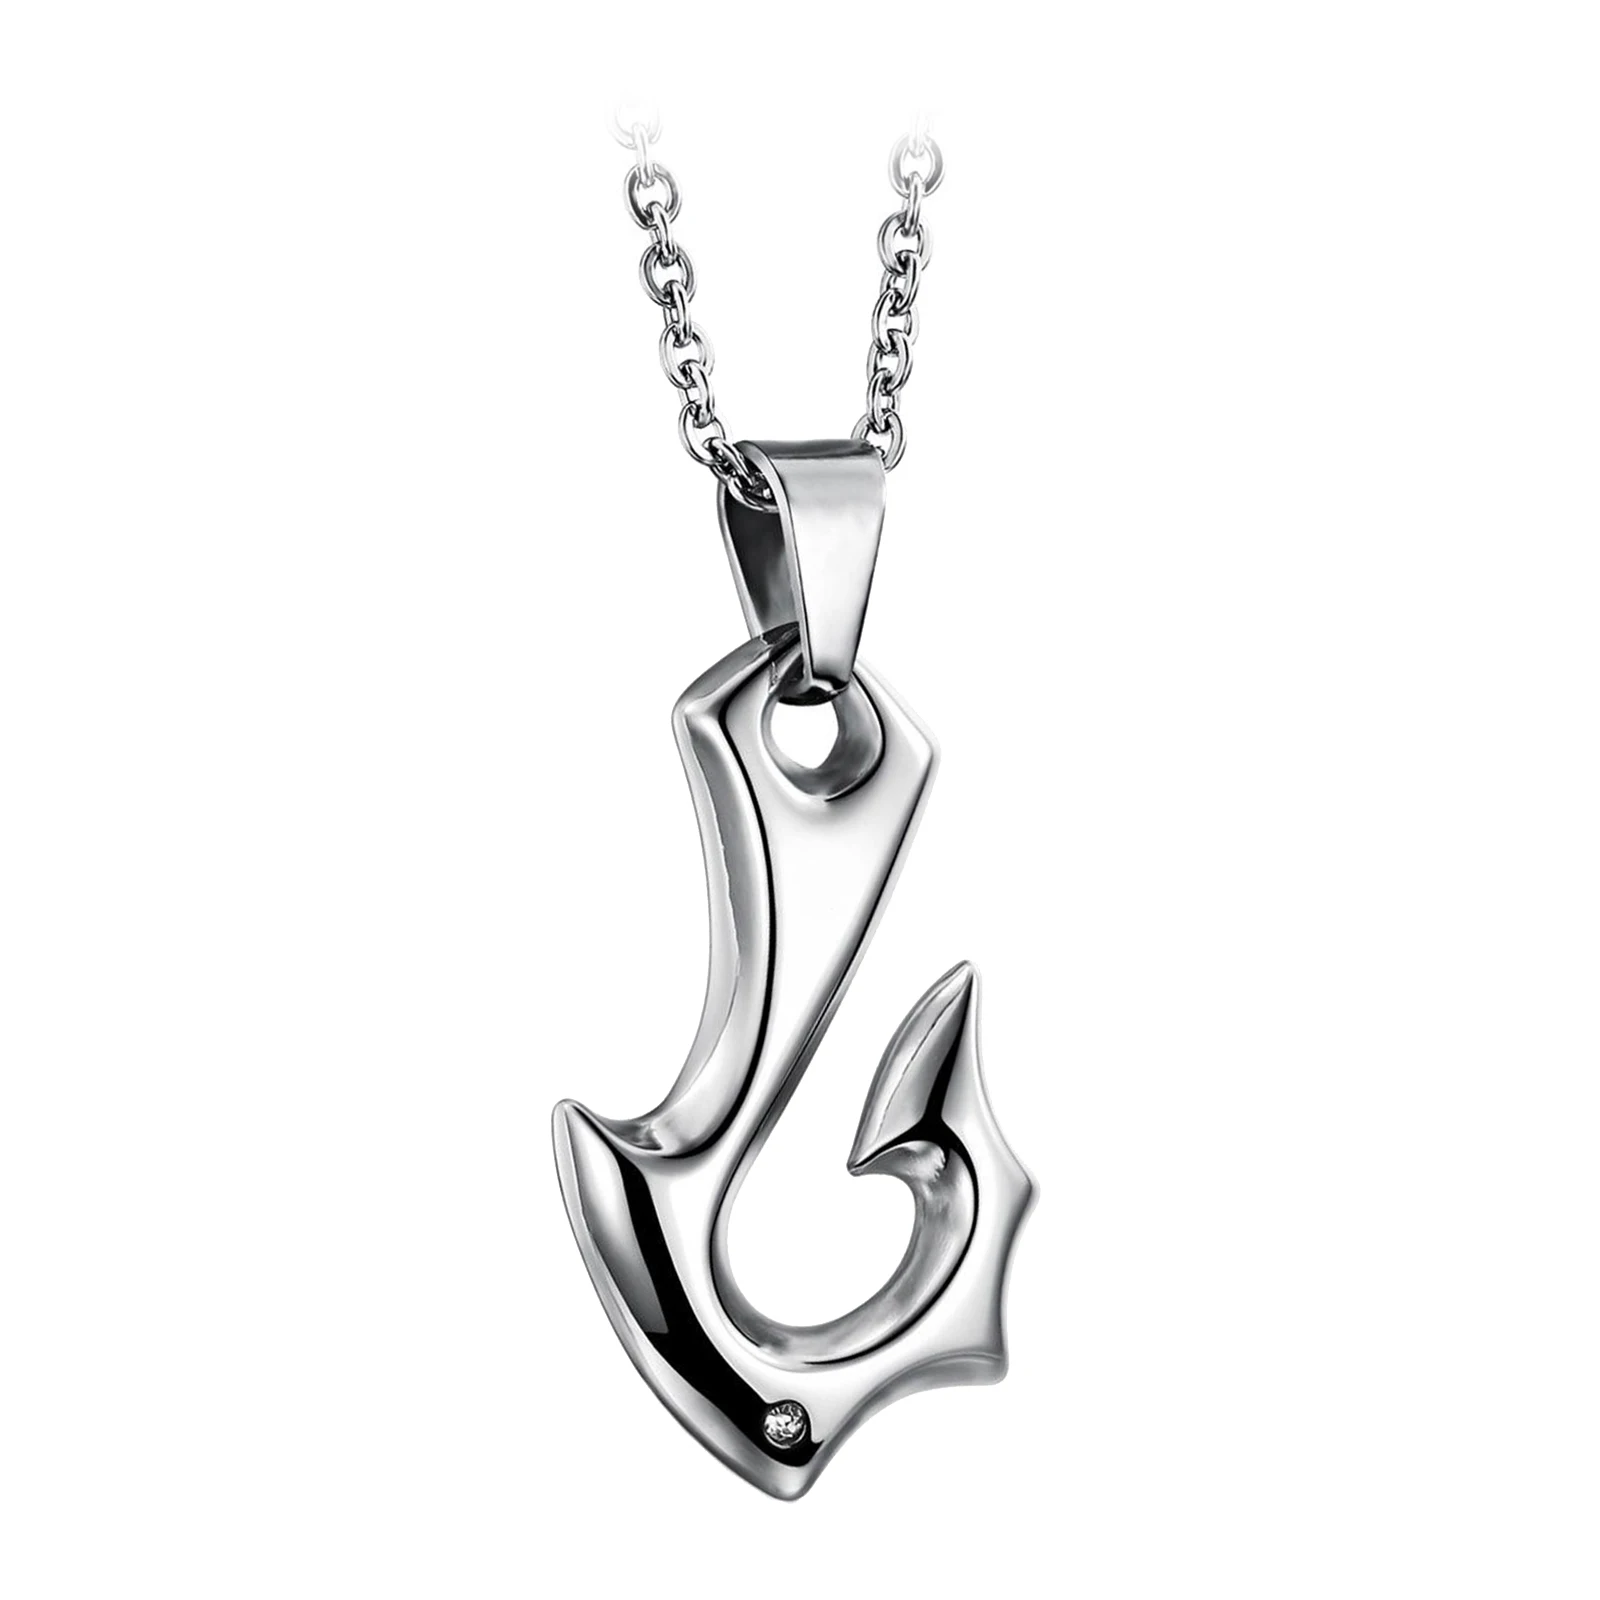 Fishhook Necklace Fishing Hook Pendant Jewelry Fishing Gift Necklace Fish Hook Gift for Couple